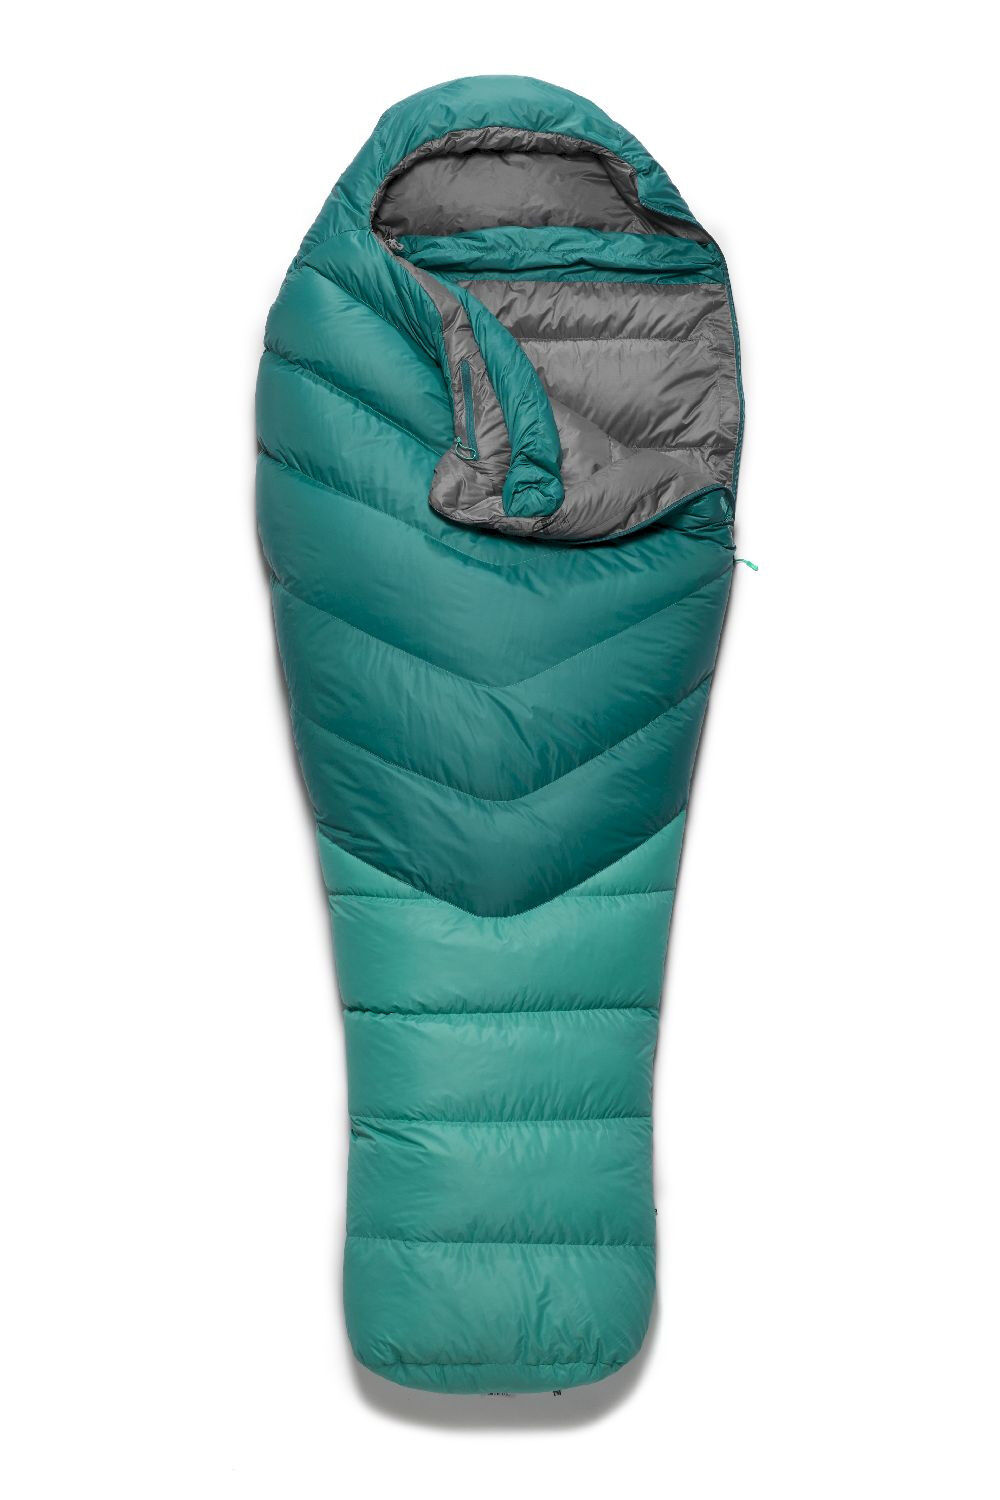 Rab Alpine 400 - Sleeping bag - Women's